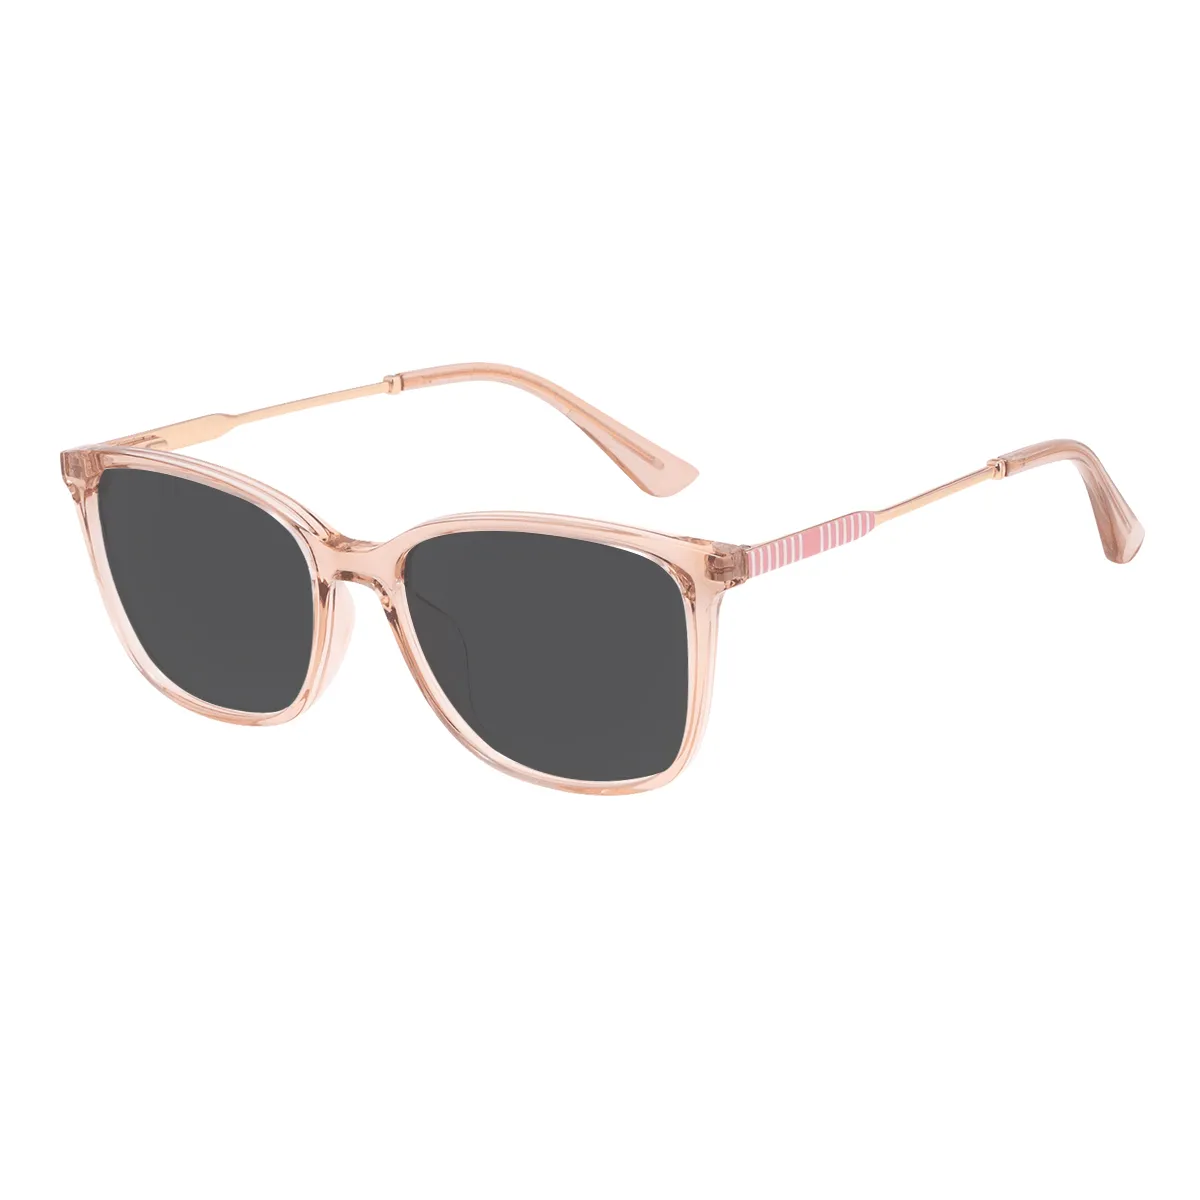 Adcock - Square Cream Sunglasses for Men & Women